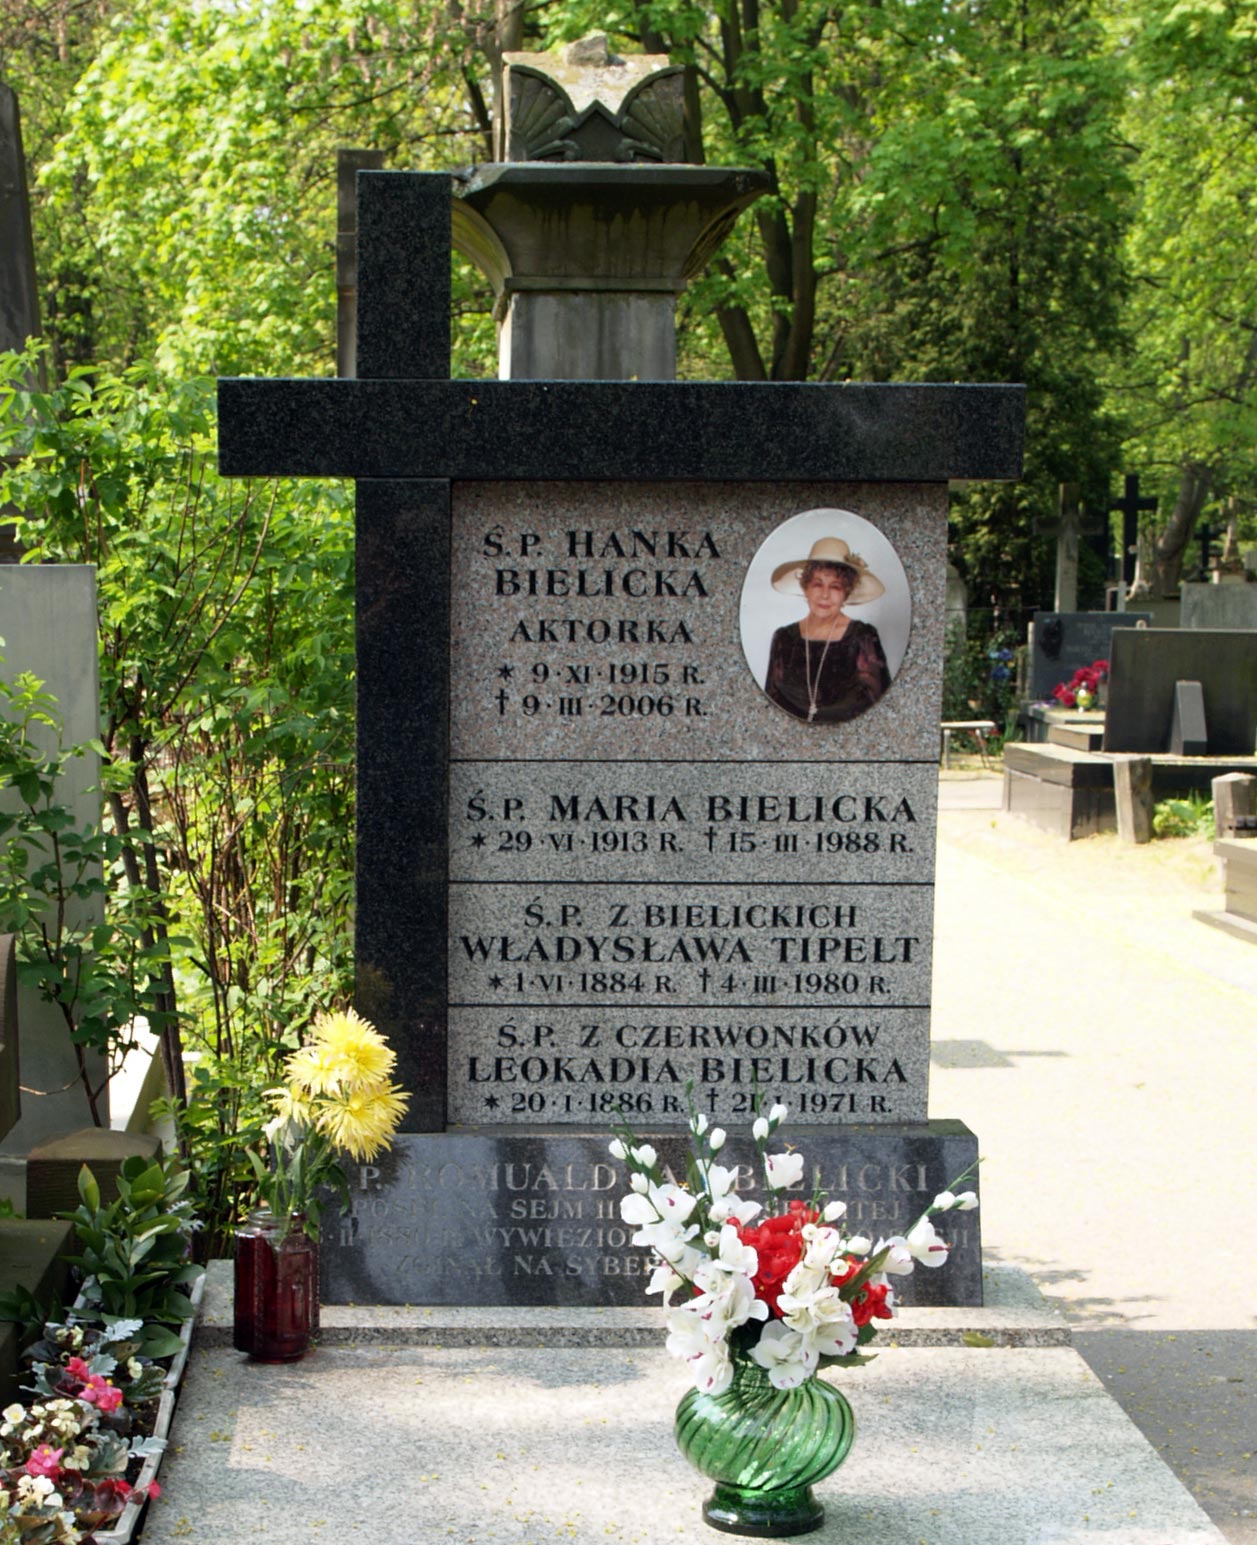 Wikipedia, Files by User:Chepry, Hanka Bielicka, Powzki Cemetery - B, Self-published work